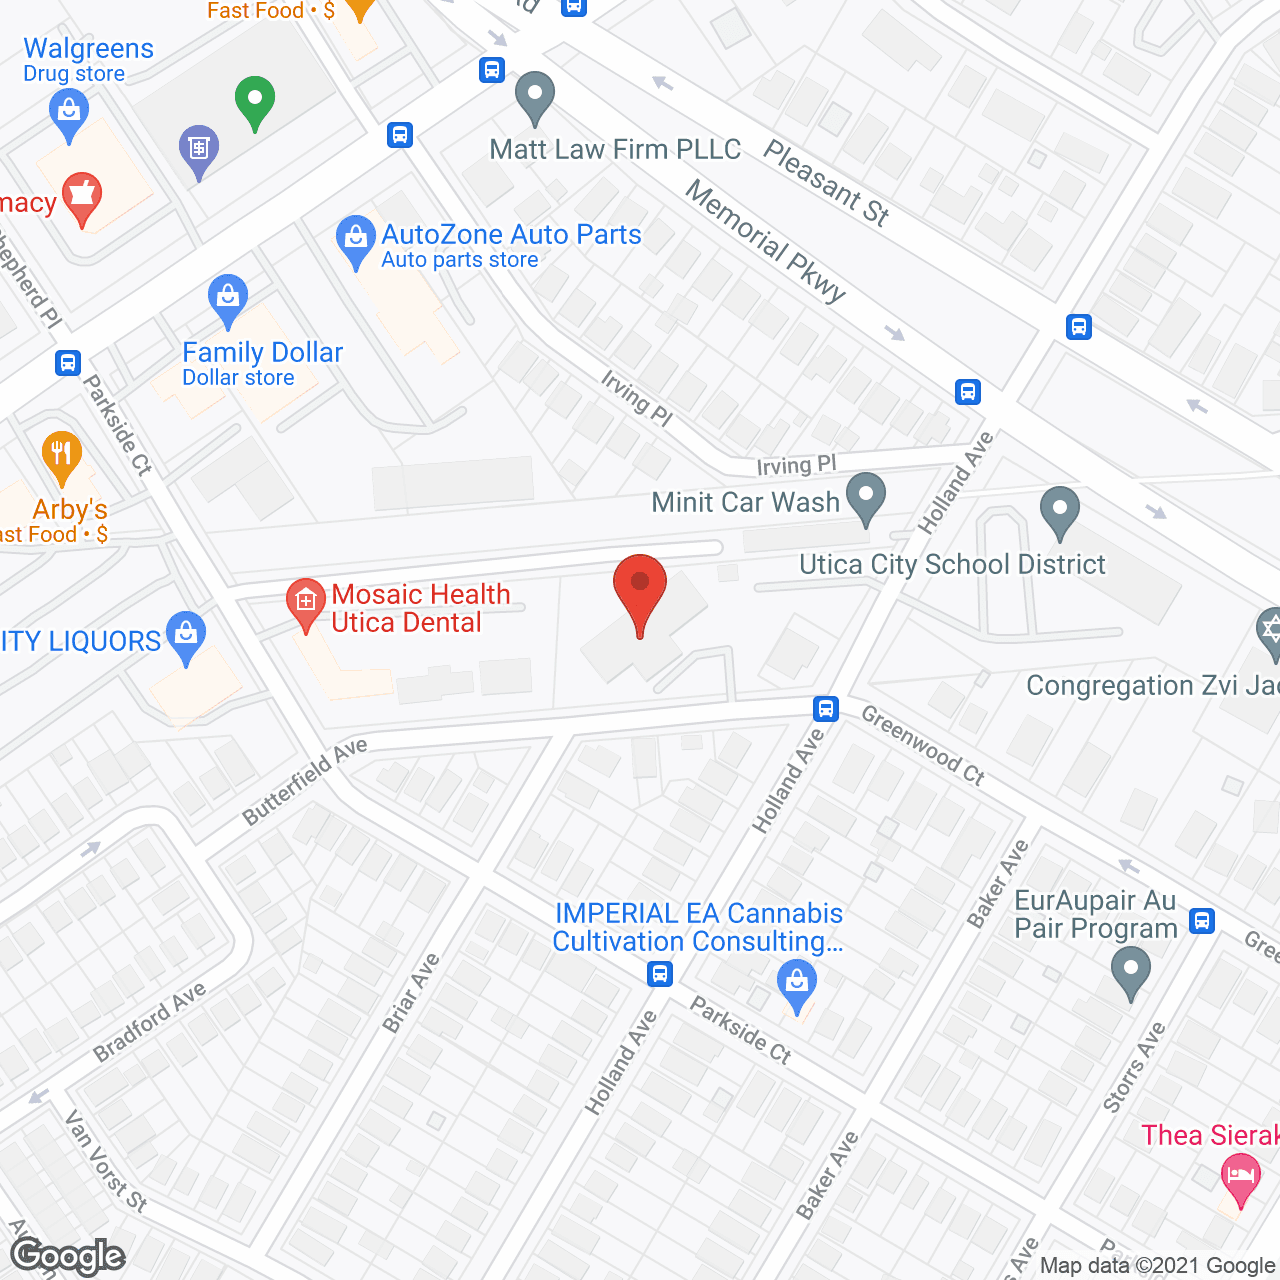 Eden Parkhealth Ctr in google map